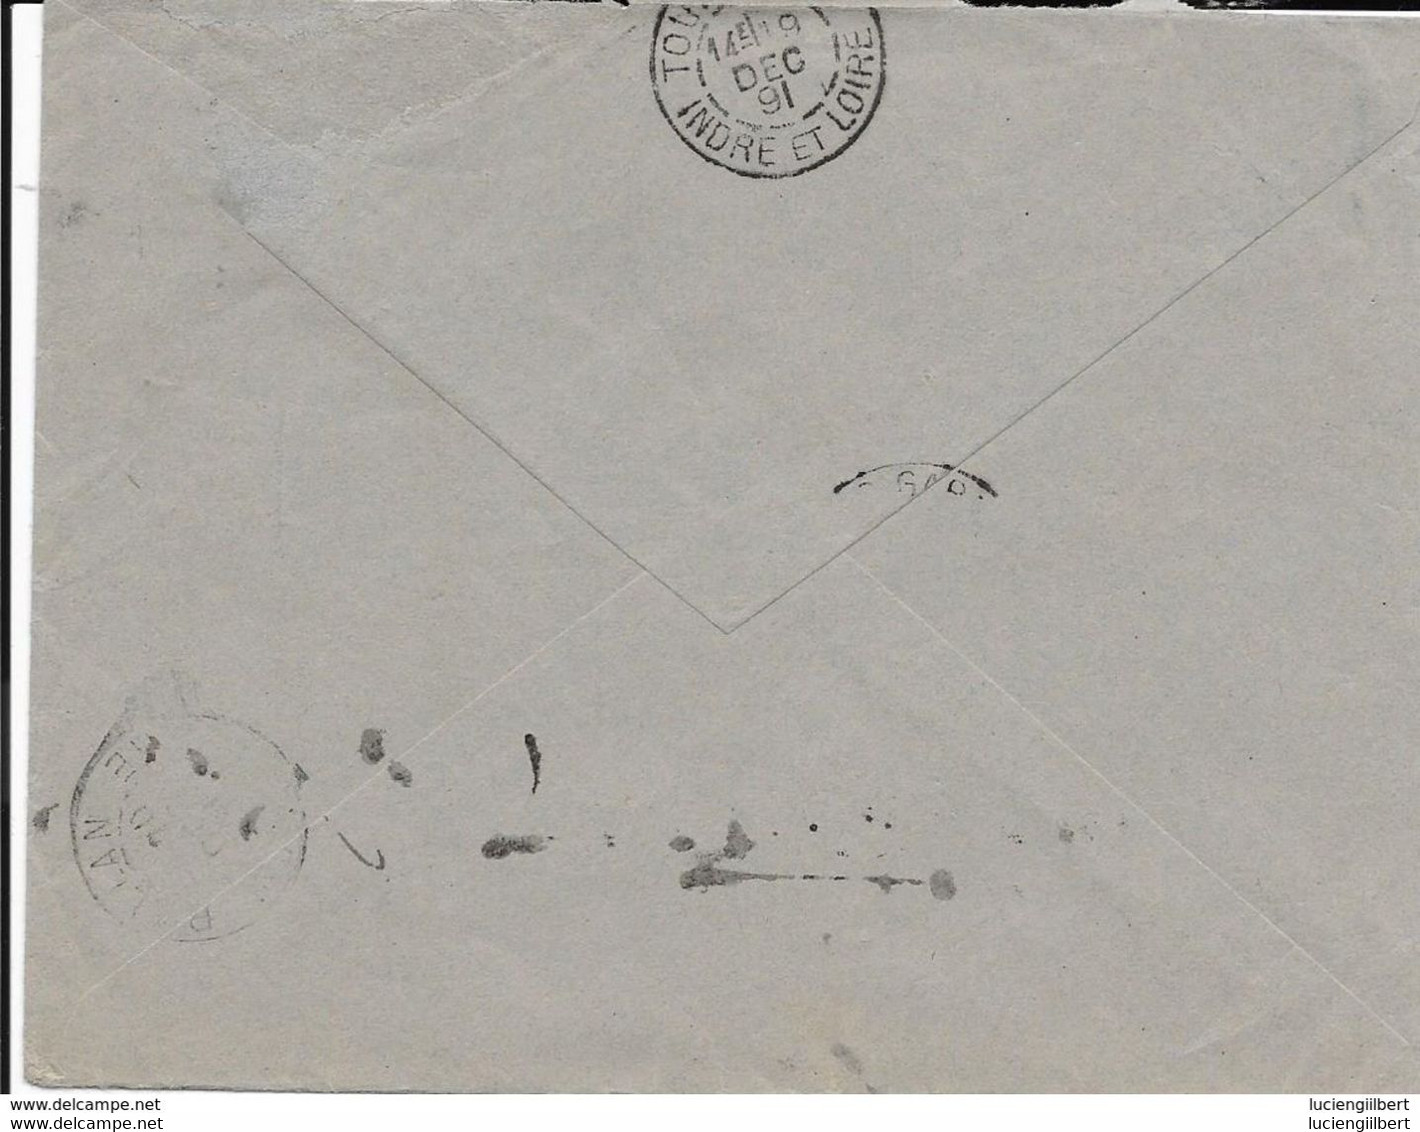 INDRE ET LOIRE 37 -  ST BRANCHS    - CACHET RECETTE R A1 - TYPE 17 Bis  - SANS N° LEVEE - TRES BELLE FRAPPE  -  1891  - - Manual Postmarks